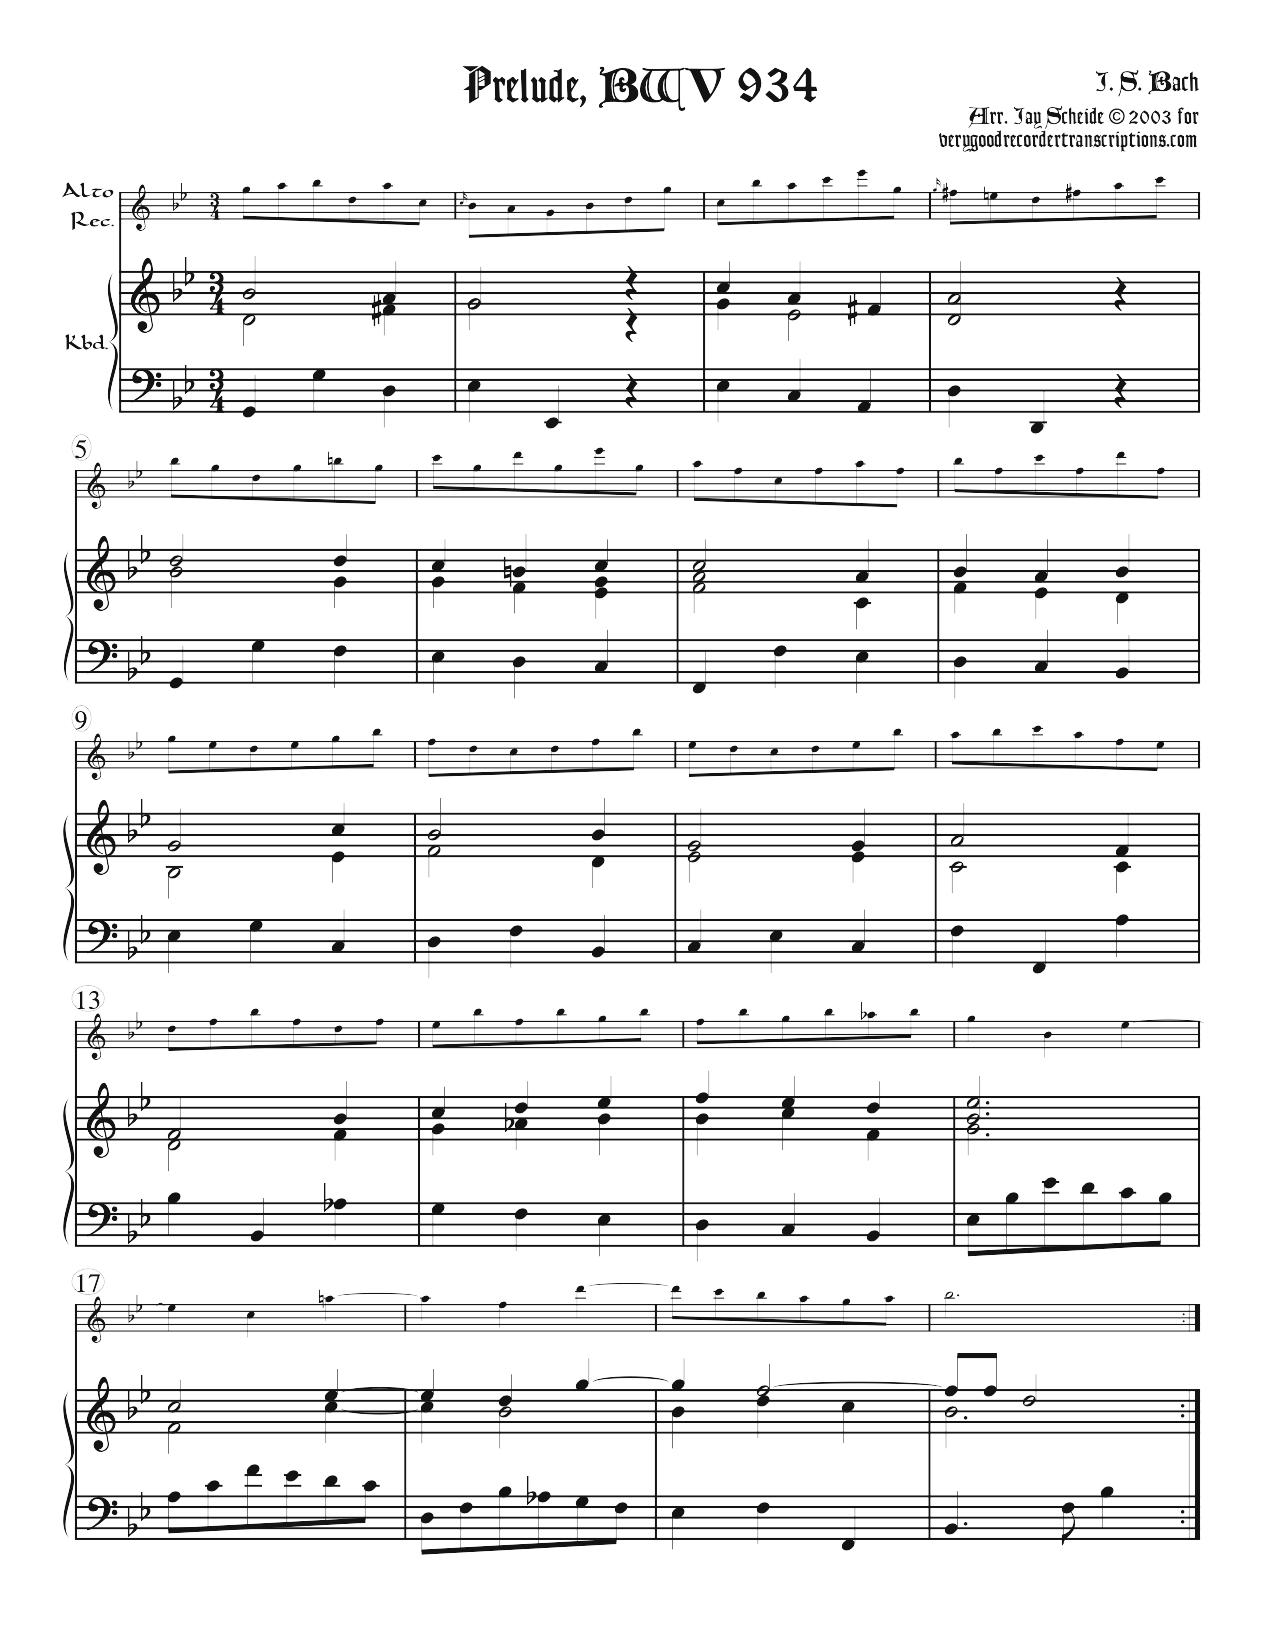 Prelude, BWV 934